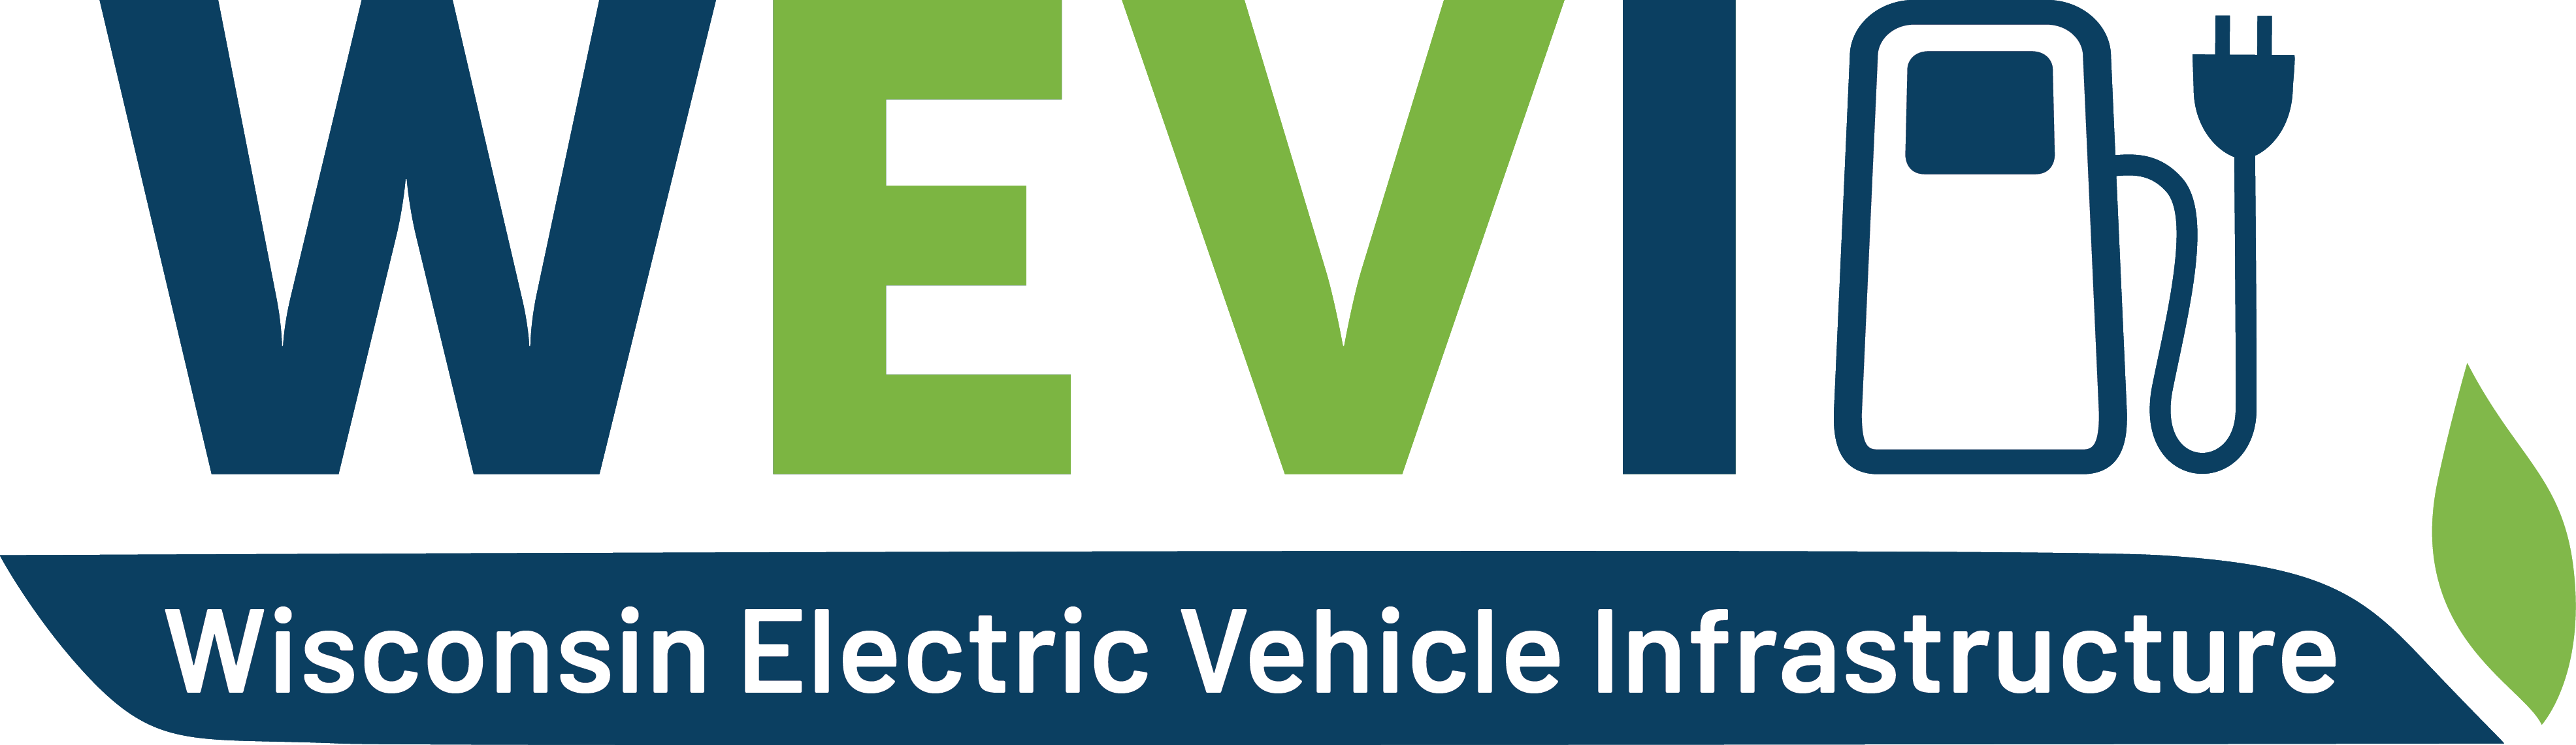 Wisconsin Electrification Initiative logo